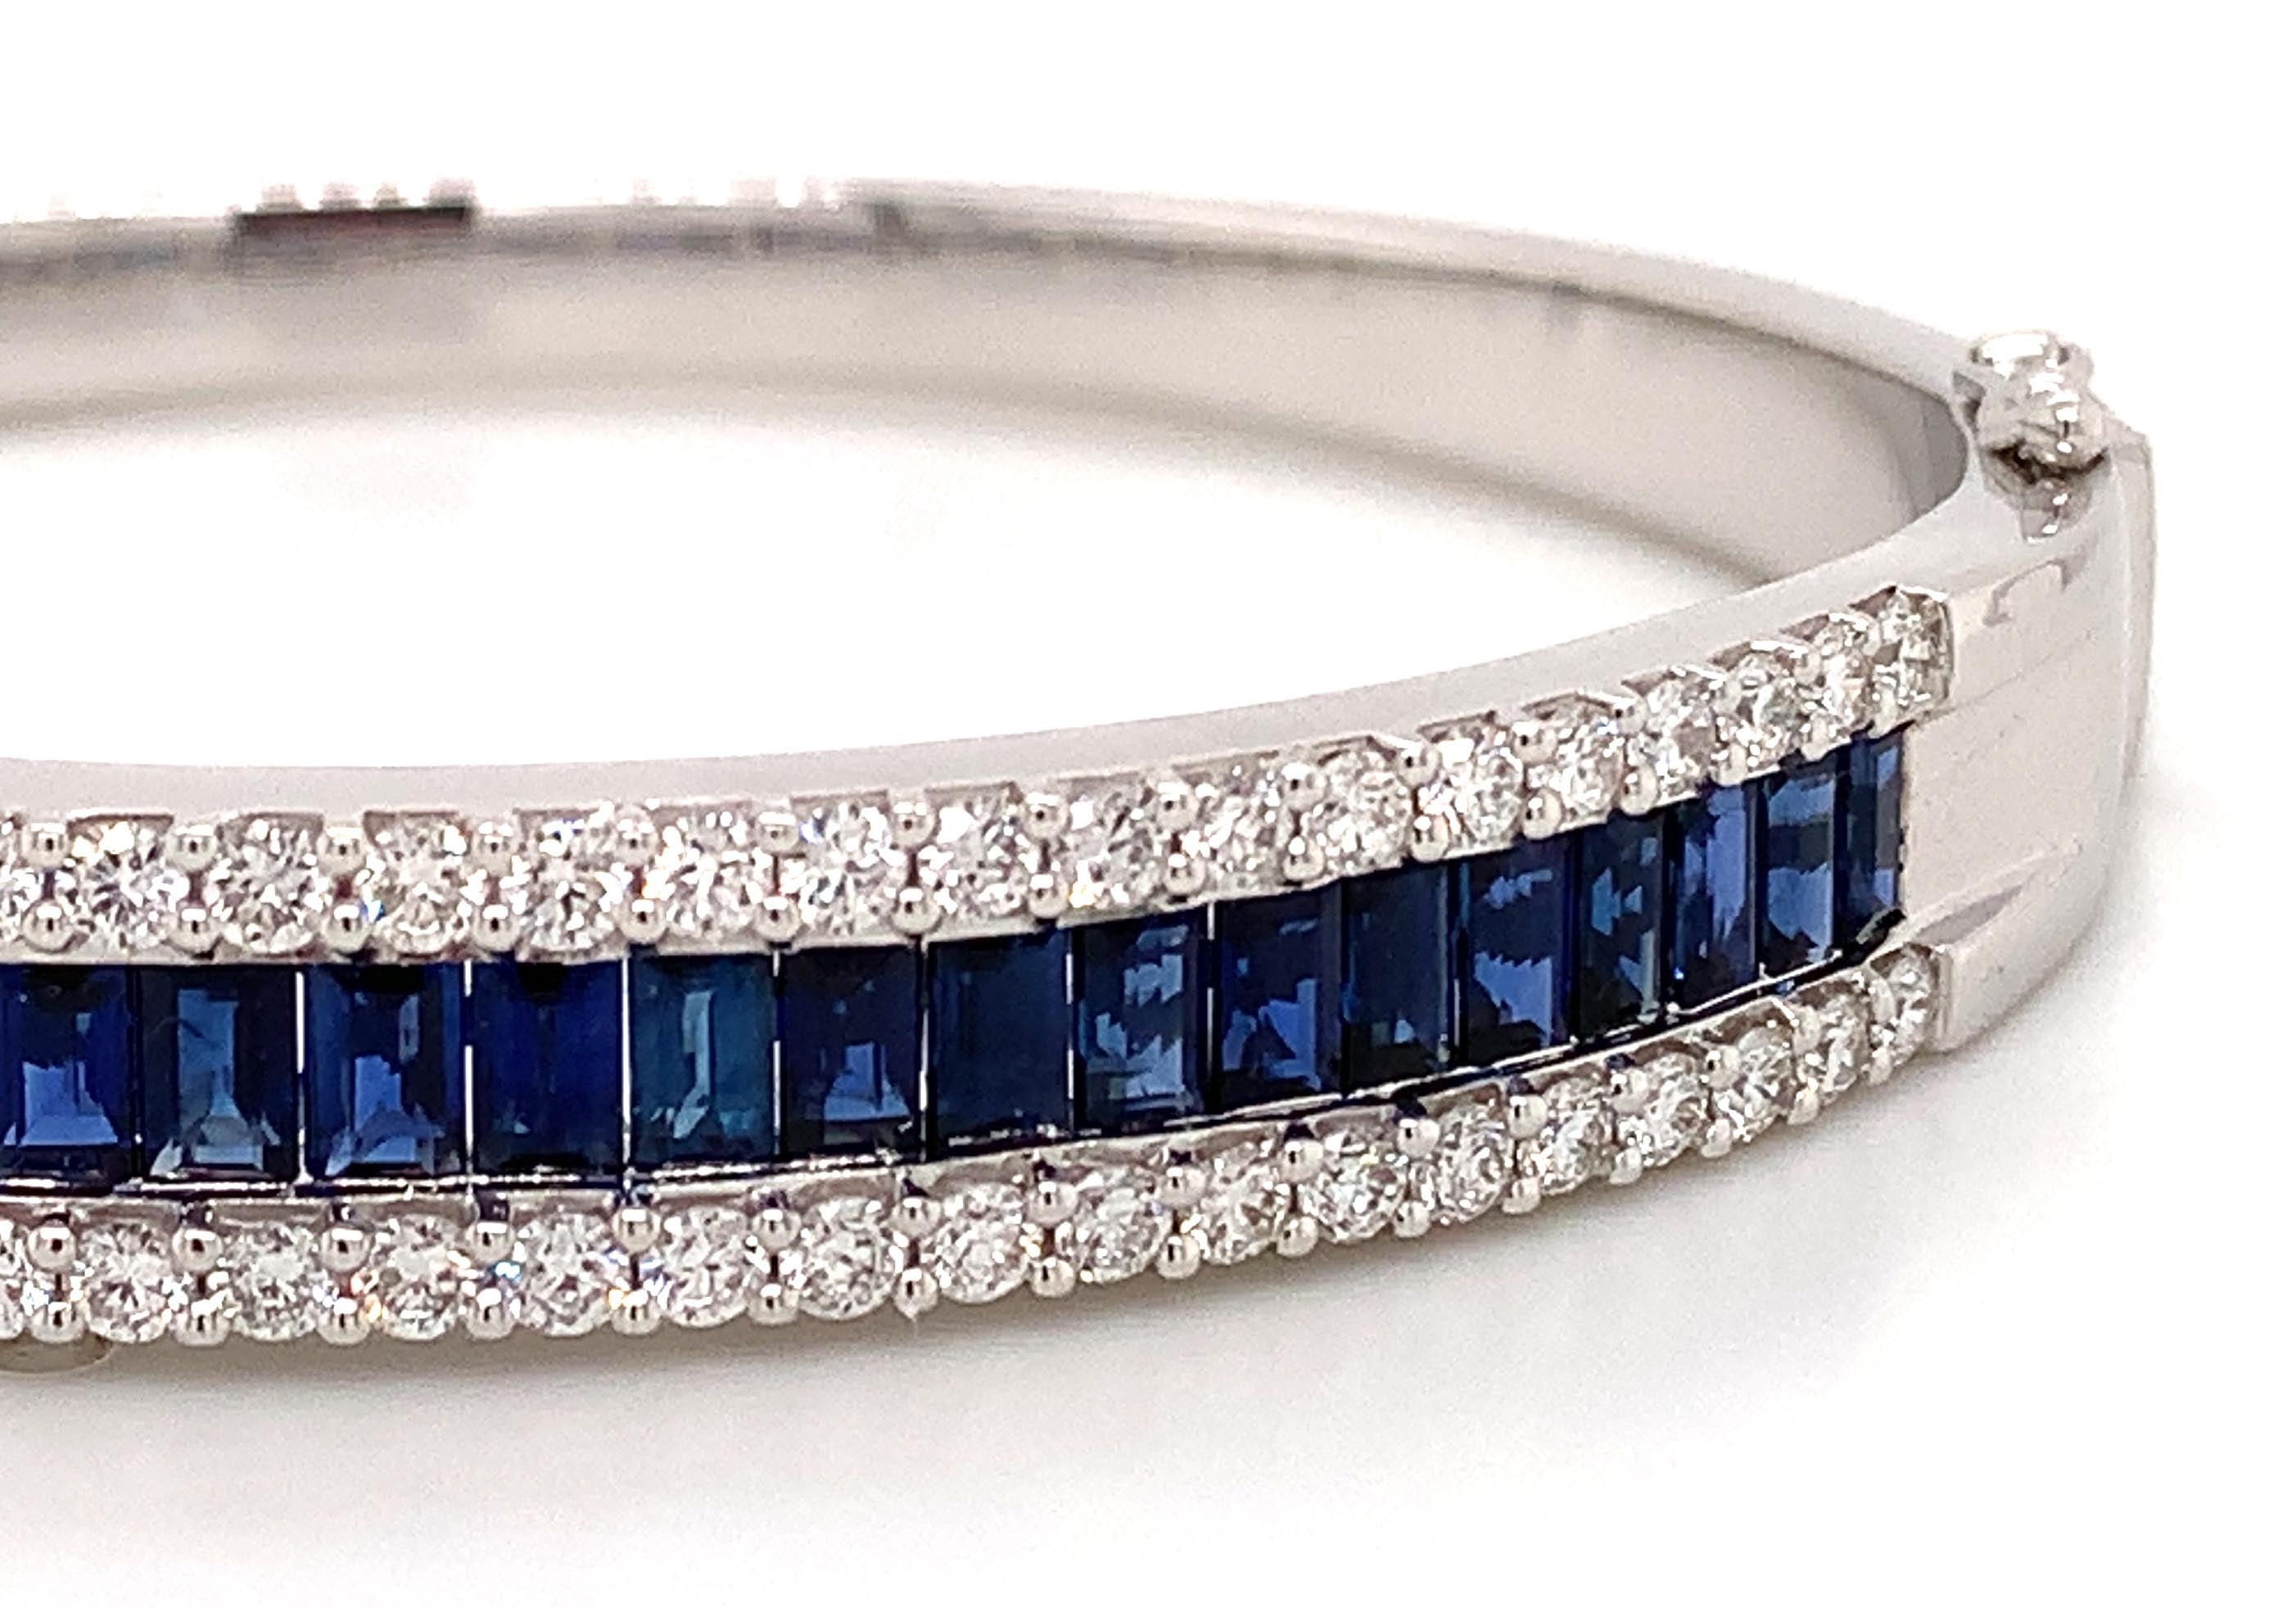 Royal Blue Sapphire & Diamond White Gold Bangle Bracelet